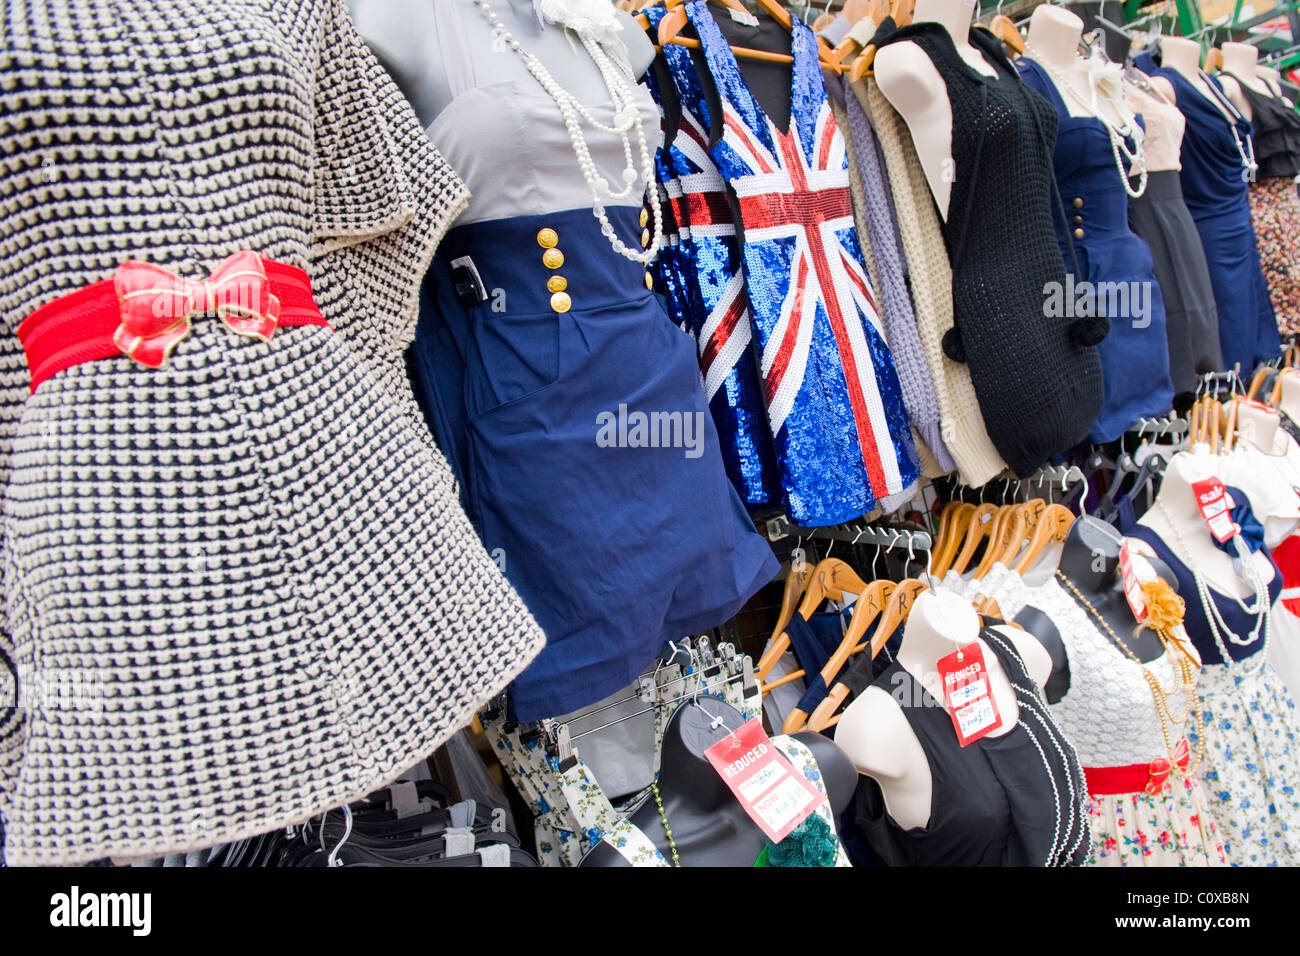 Camden Town or Lock or Horses Market , London , stall with retro miniskirts & dresses & union jack dress Stock Photo